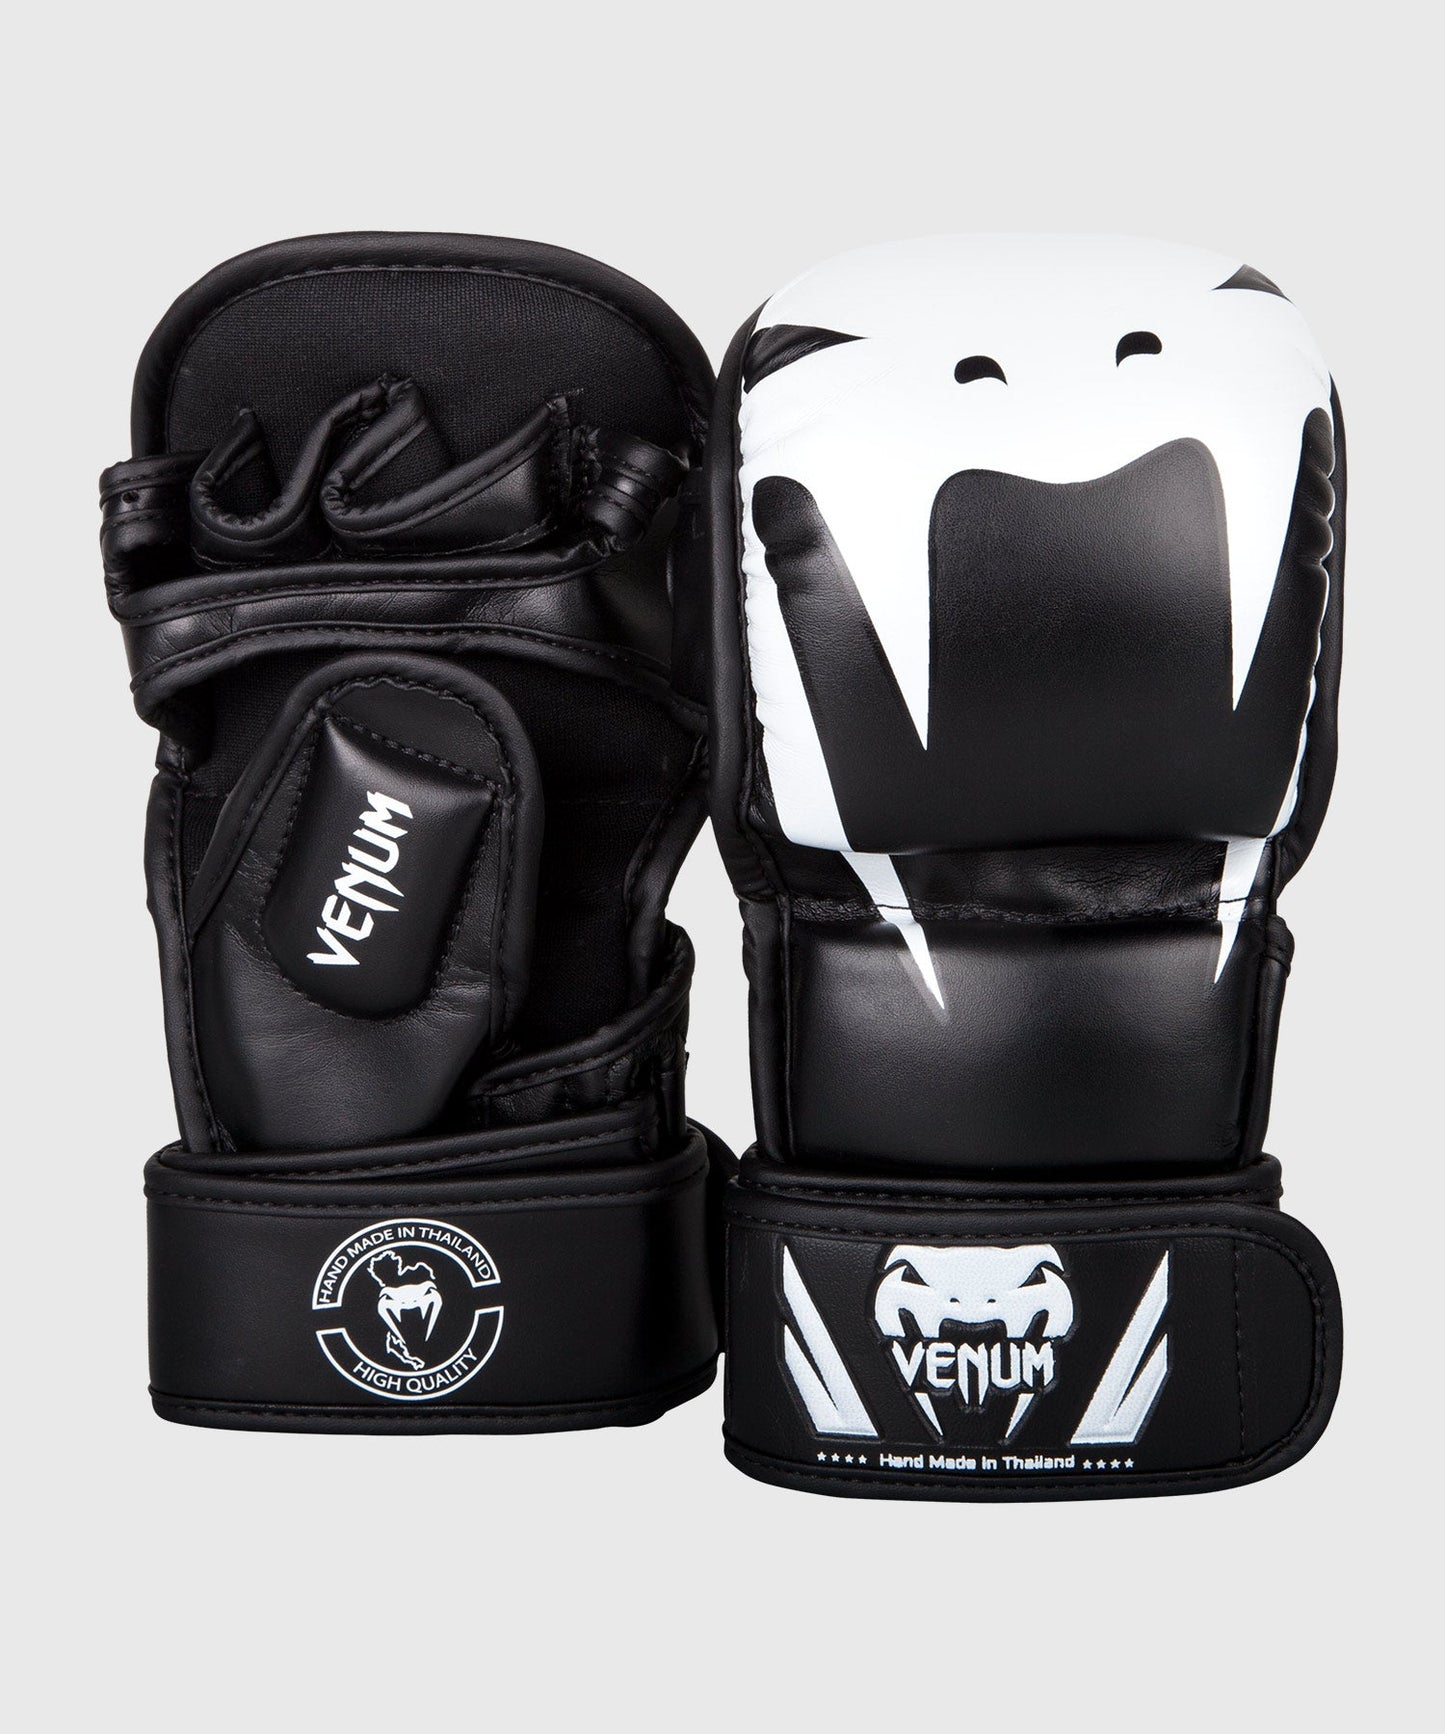 Venum Impact Sparring MMA Gloves - Black/White